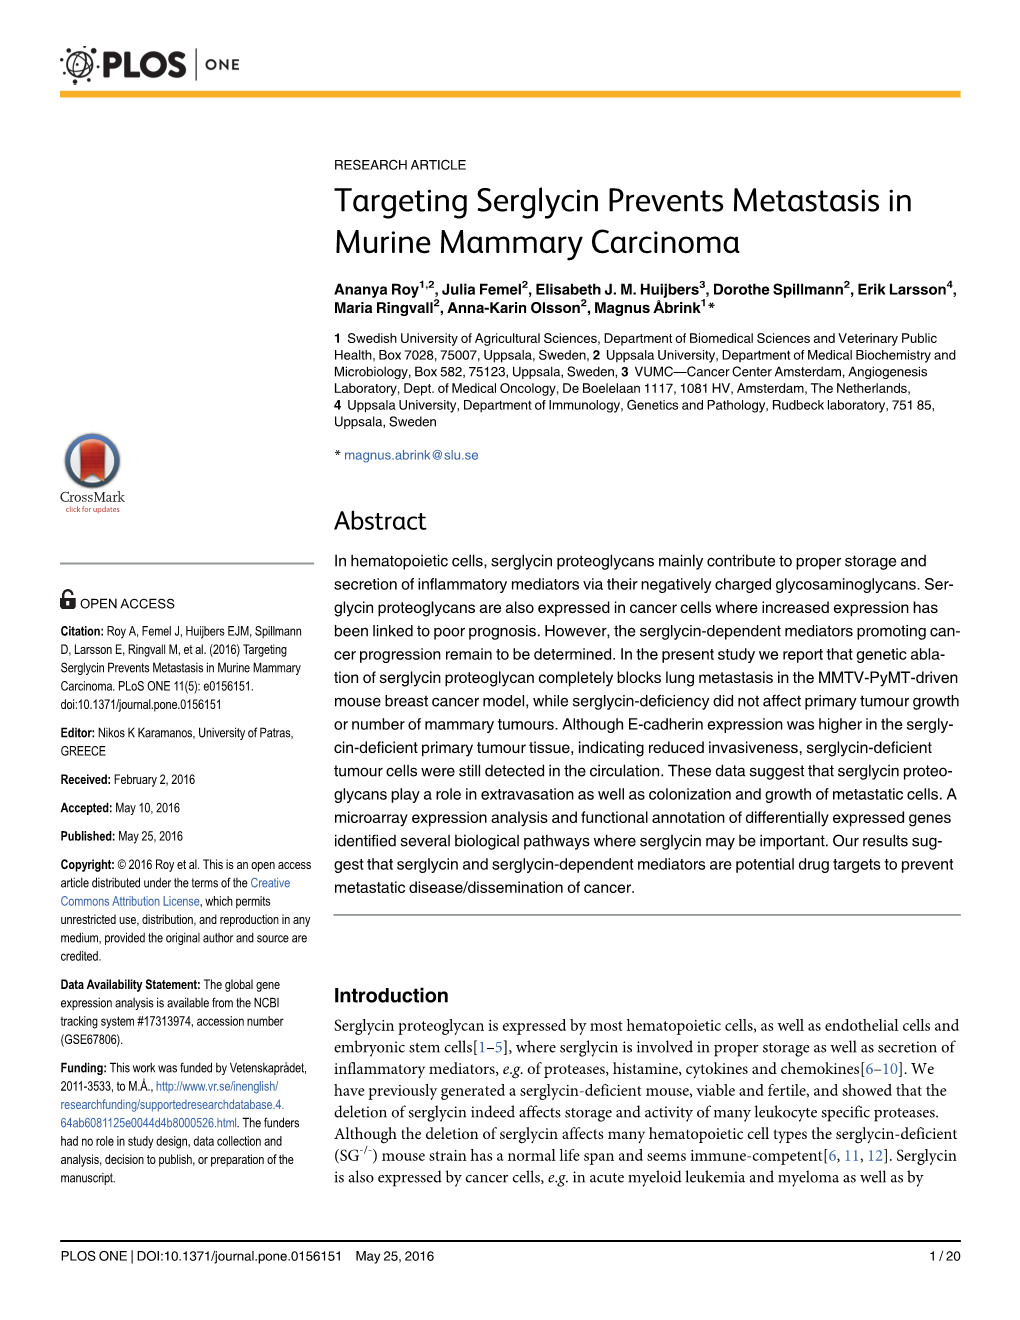 Targeting Serglycin Prevents Metastasis in Murine Mammary Carcinoma